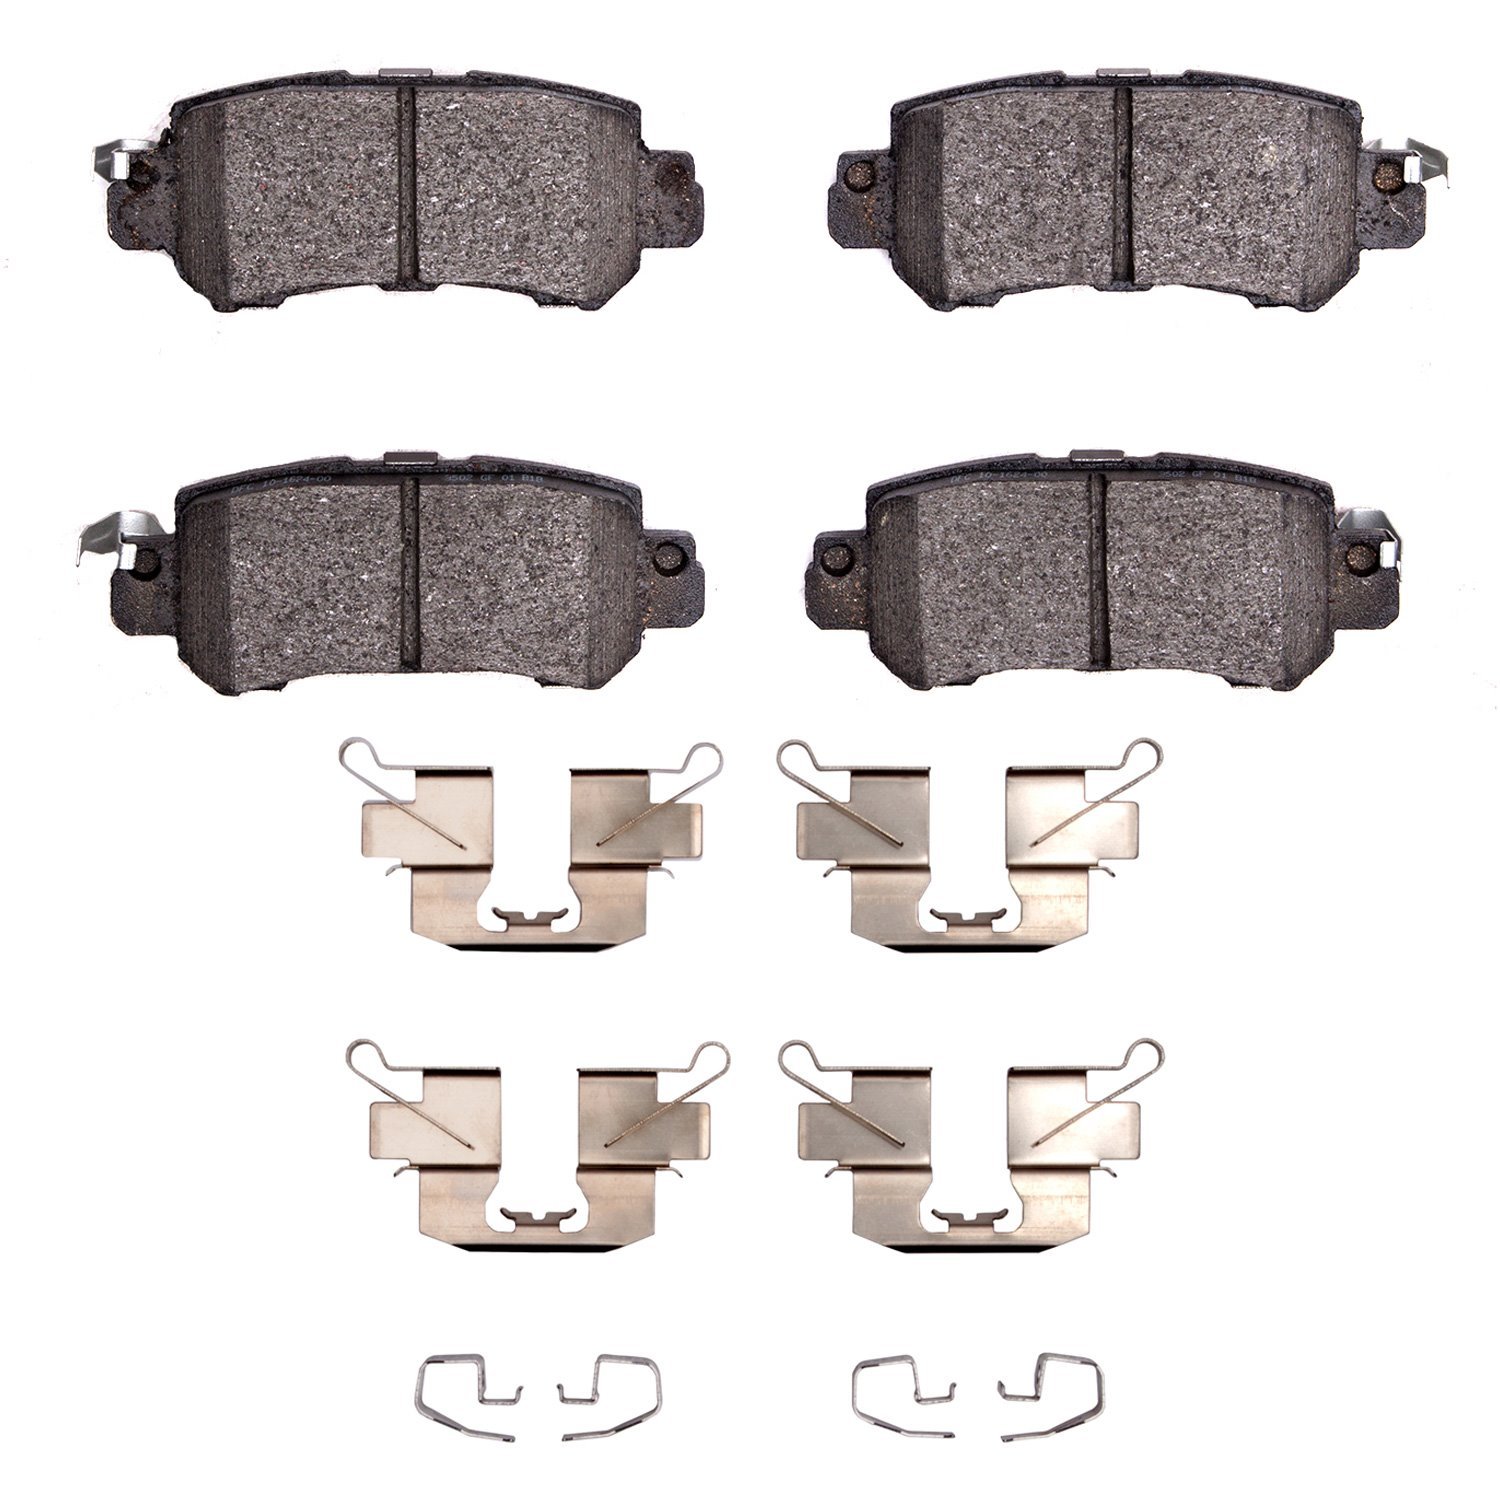 1310-1624-01 3000-Series Ceramic Brake Pads & Hardware Kit, 2013-2018 Ford/Lincoln/Mercury/Mazda, Position: Rear